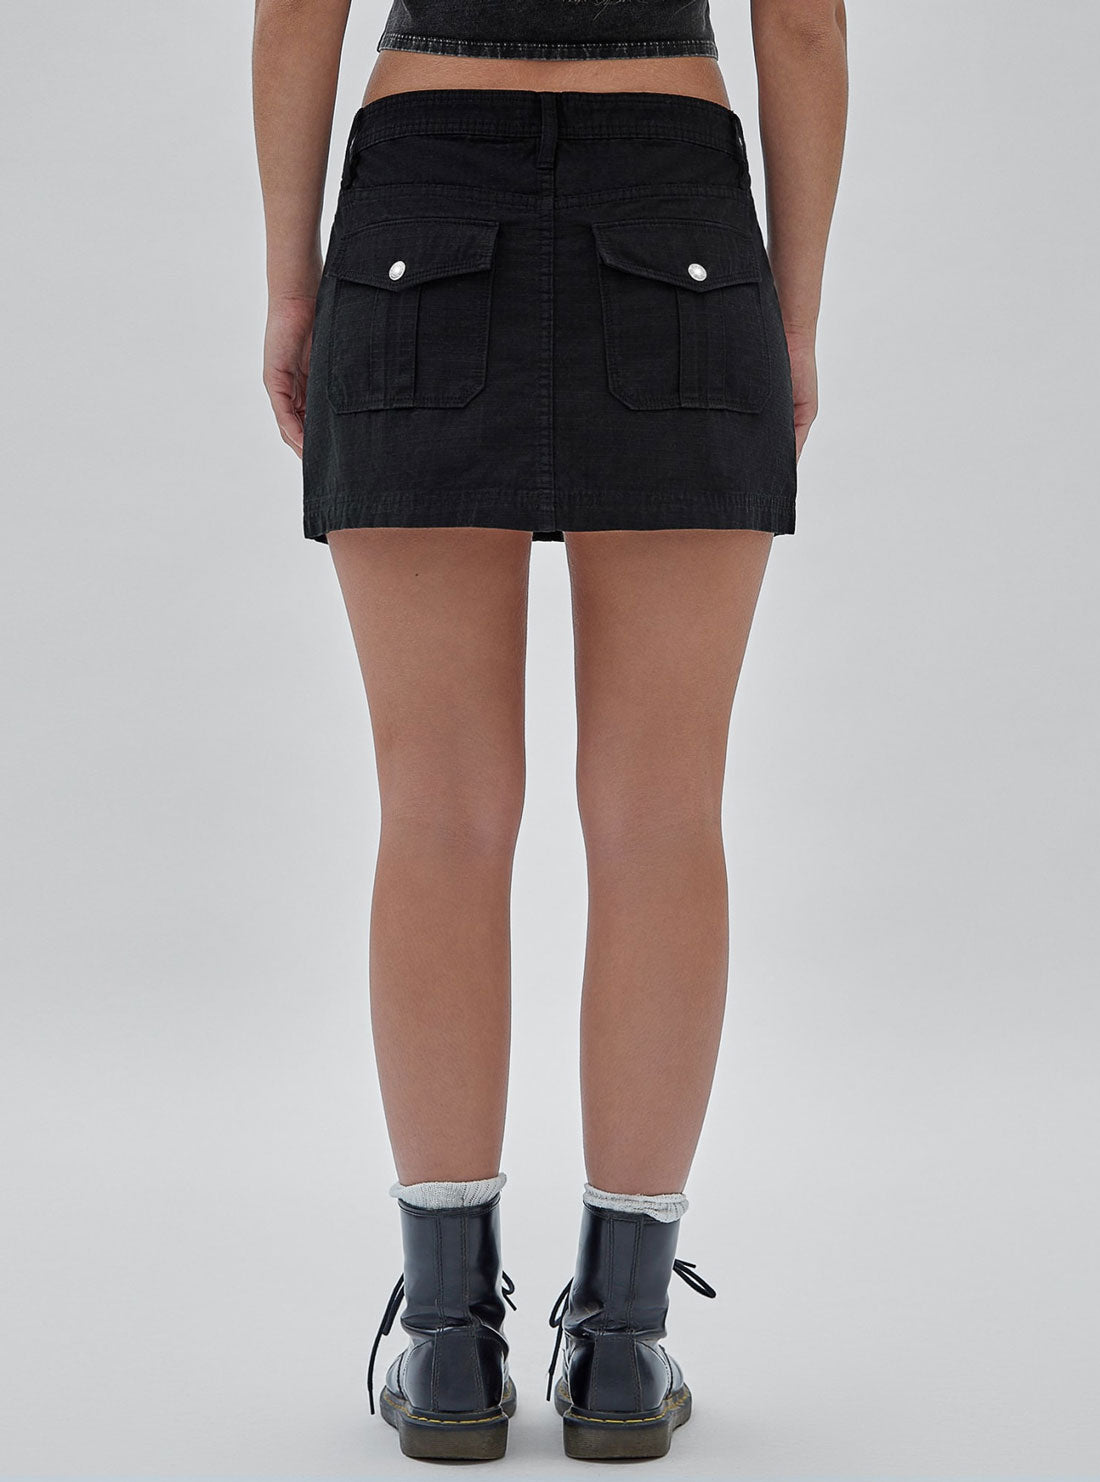 Guess Originals Black Ripstop Mini Skirt | GUESS Women's Apparel | back view